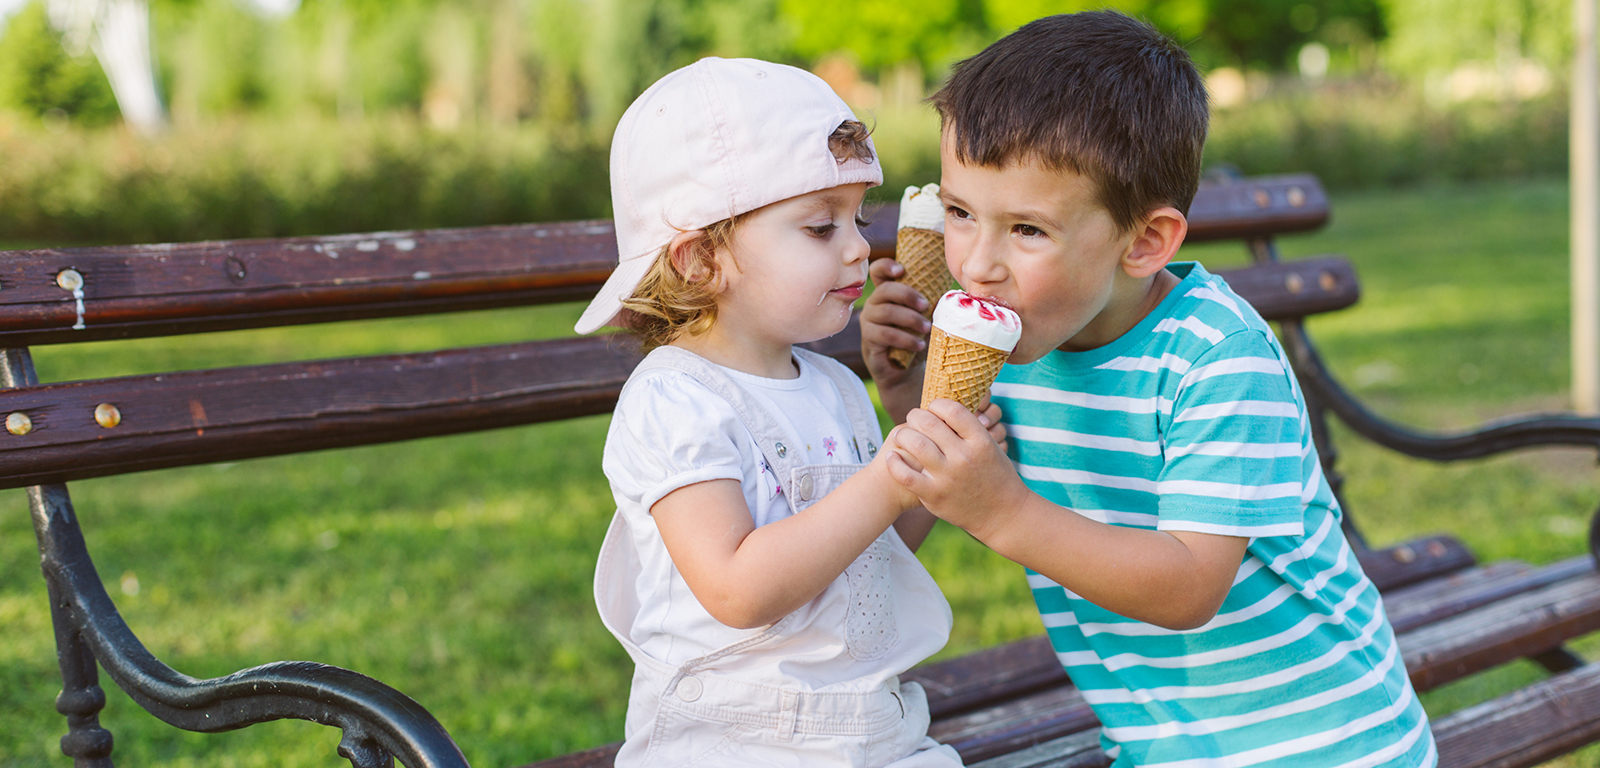 two children share an ice cream